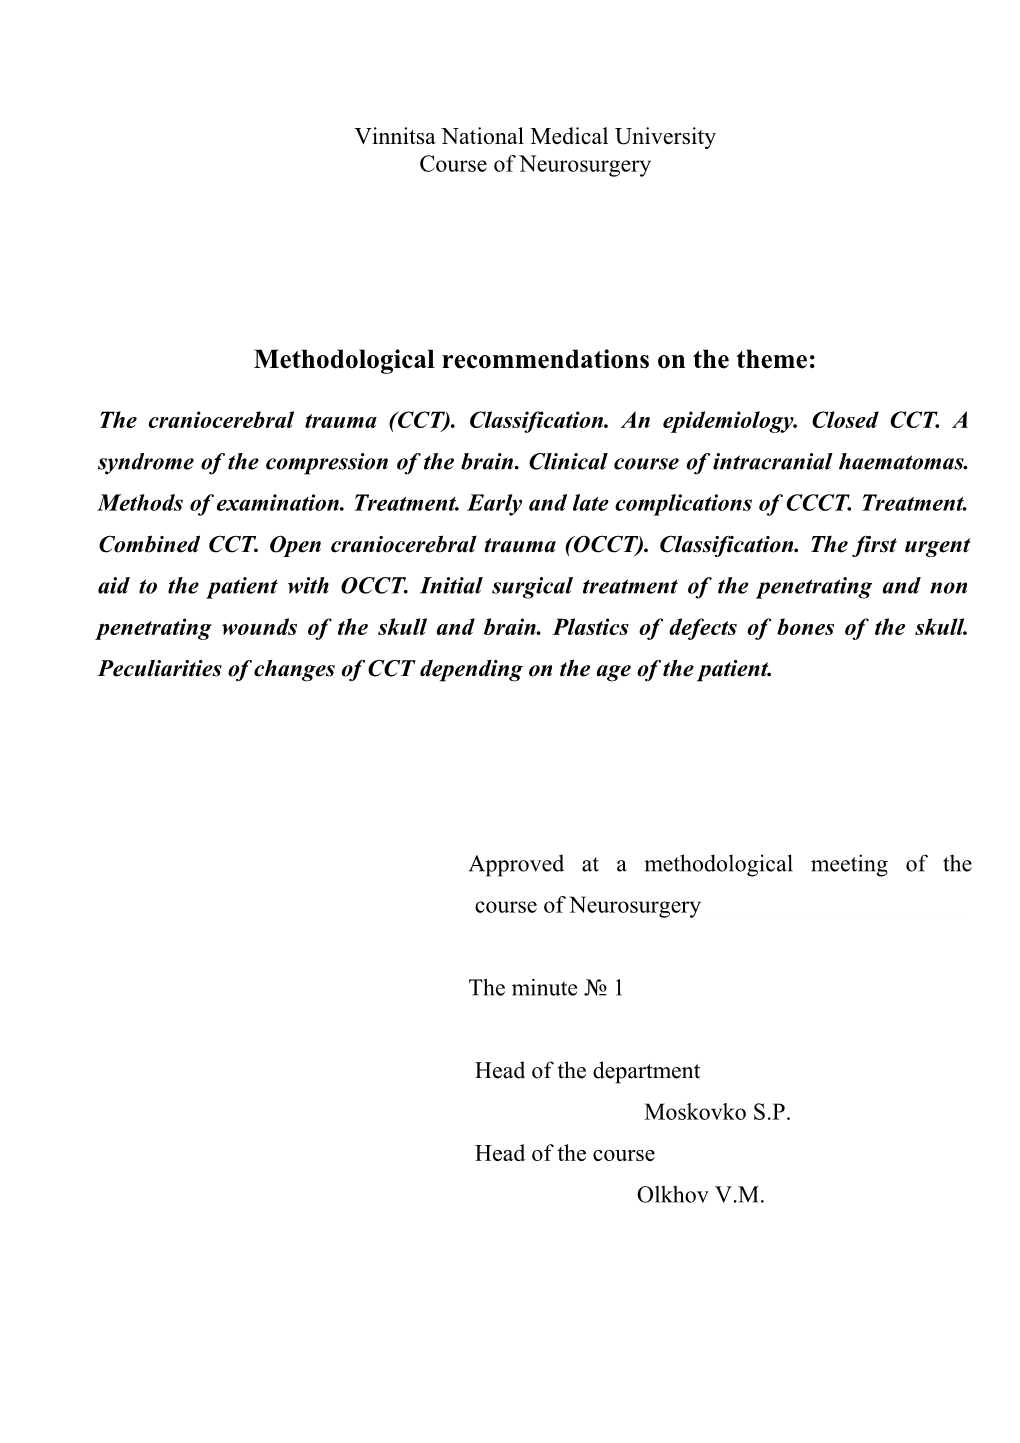 Theme of Practical Employment(Occupation): Craniocerebral Trauma (CCT)